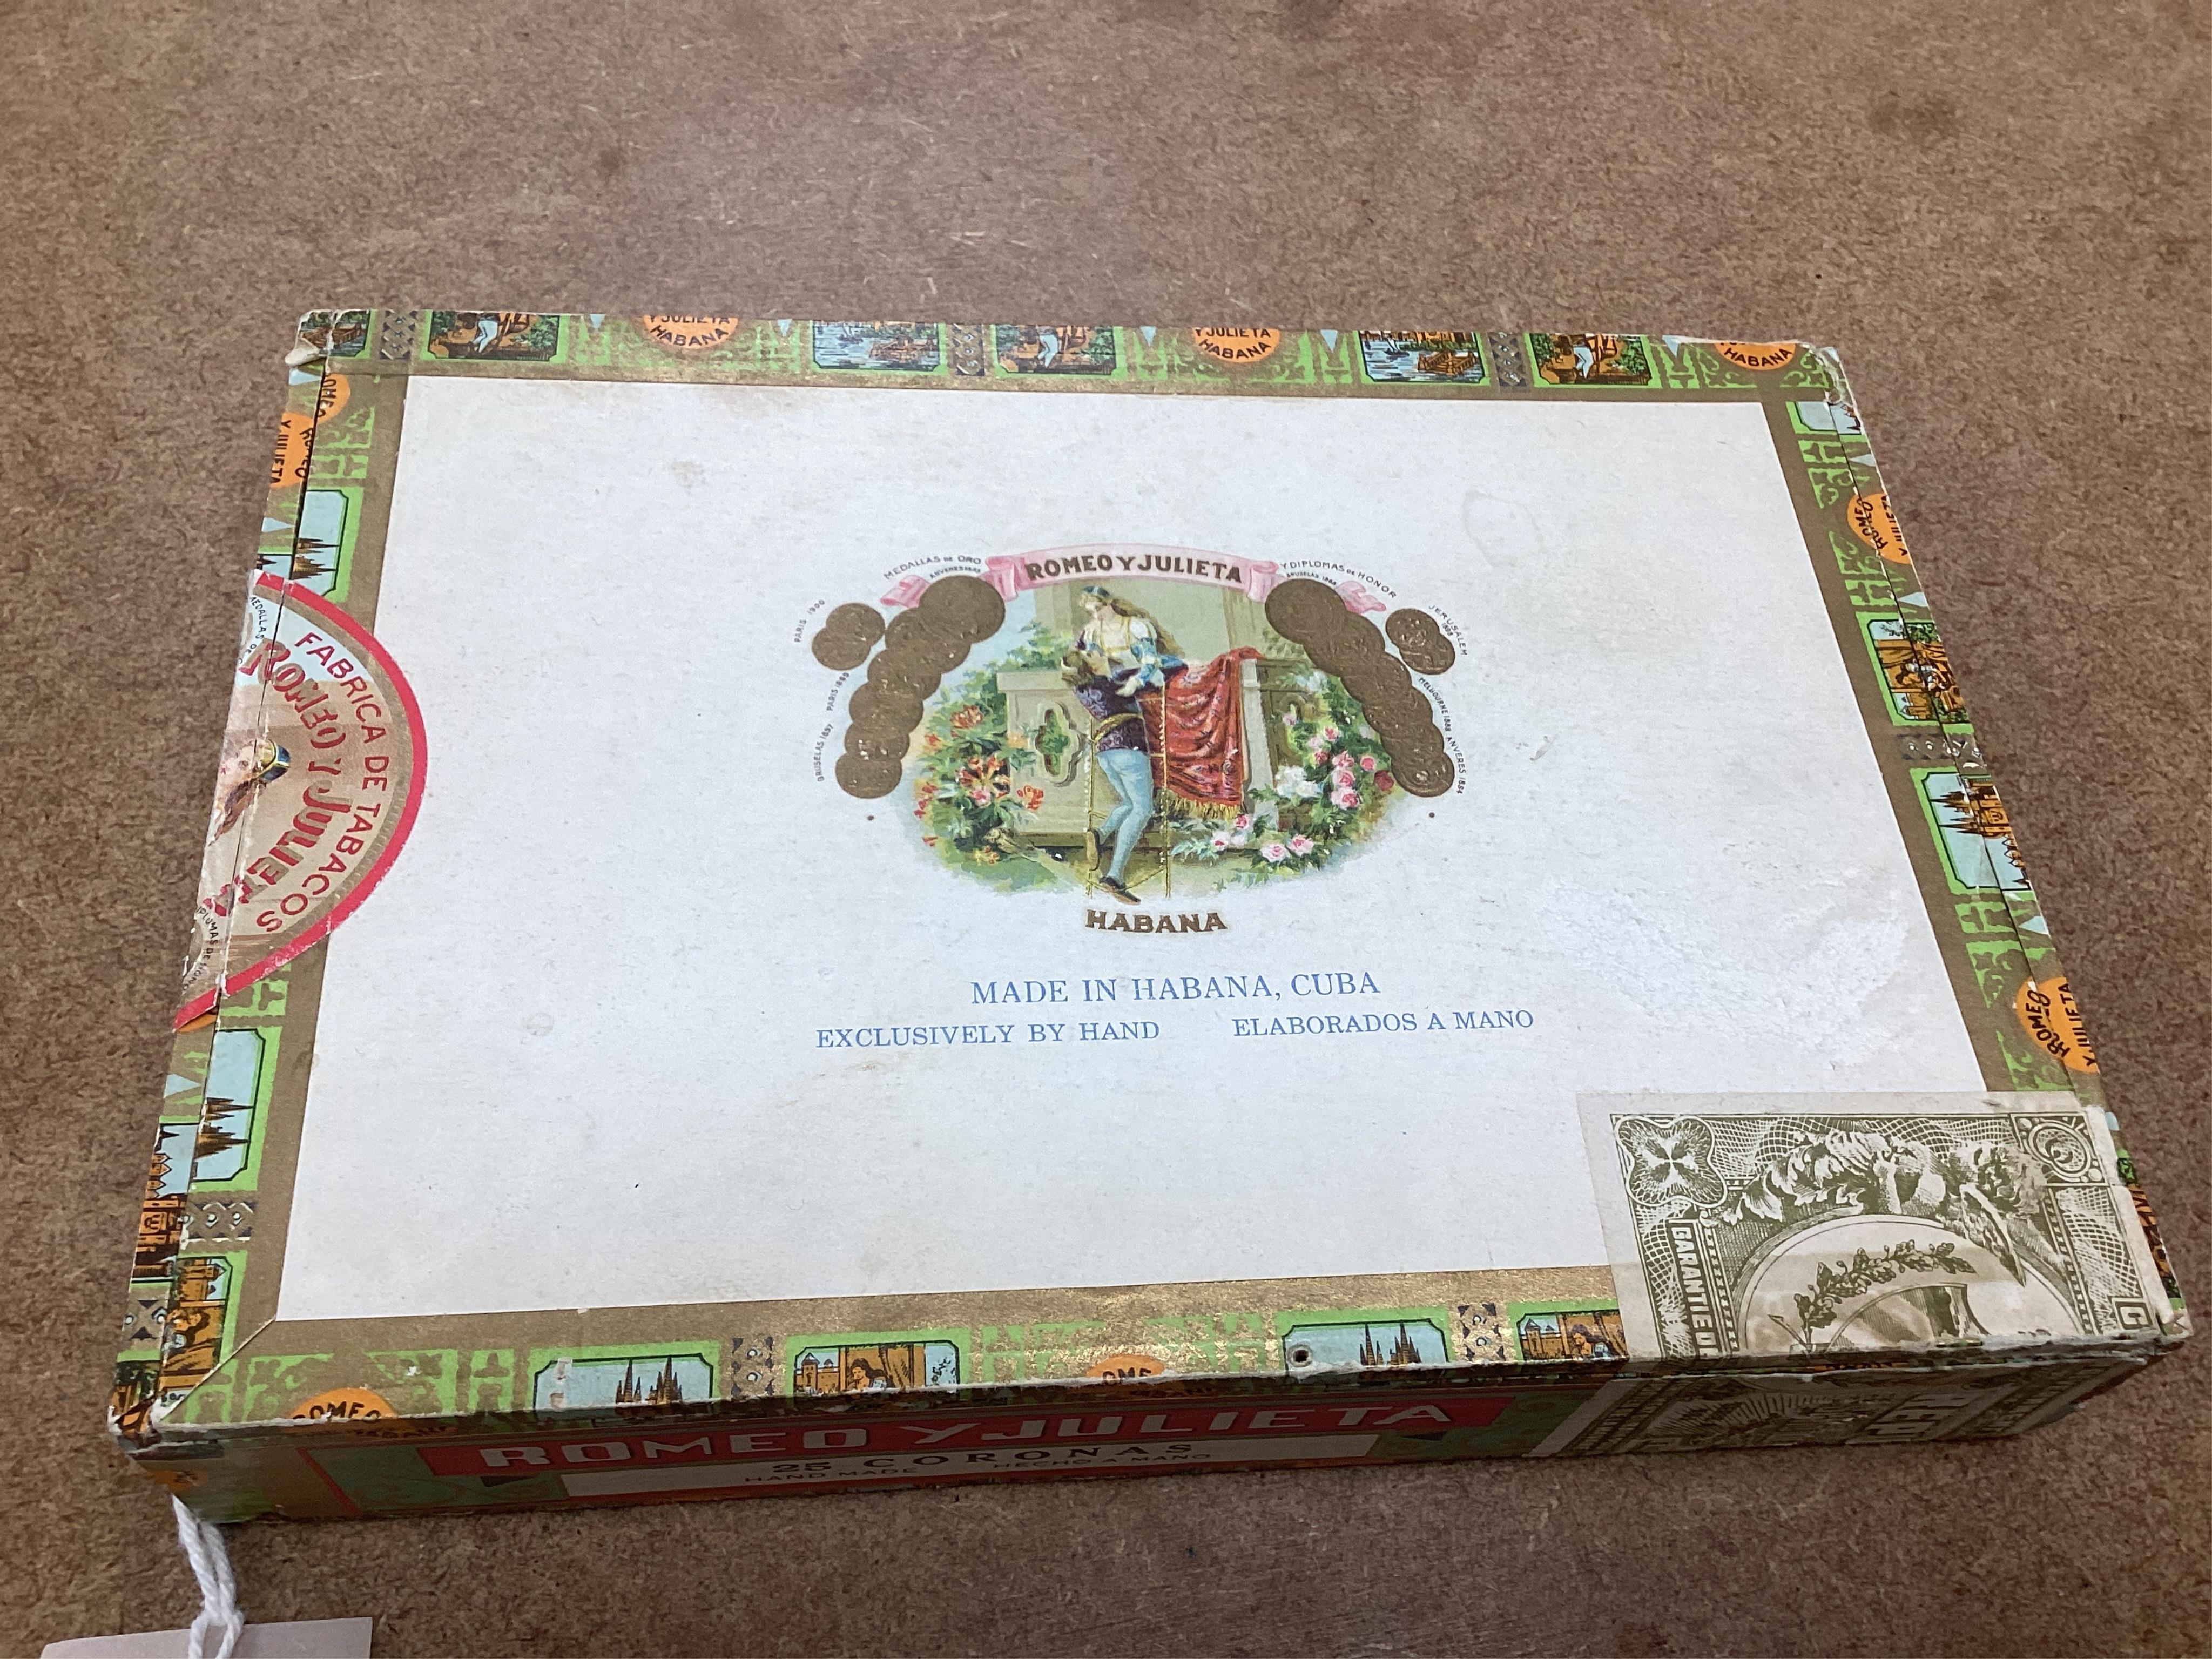 Romeo and Julieta Habana Corona cigars, twelve in total, boxed, not sealed